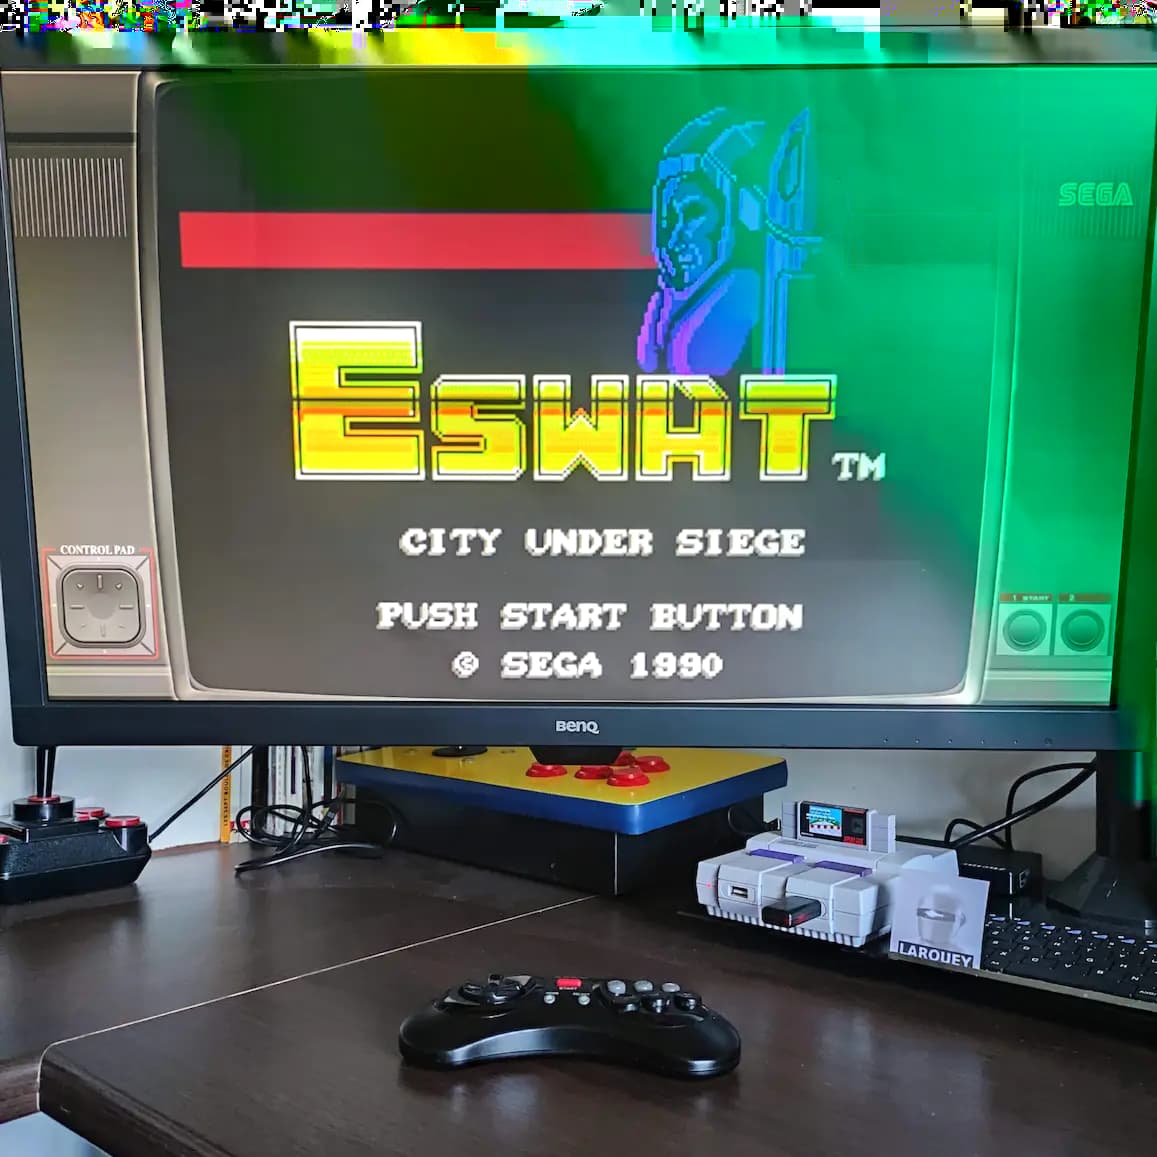 Larquey: E-Swat [easy] (Sega Master System Emulated) 5,300 points on 2022-08-02 05:07:56